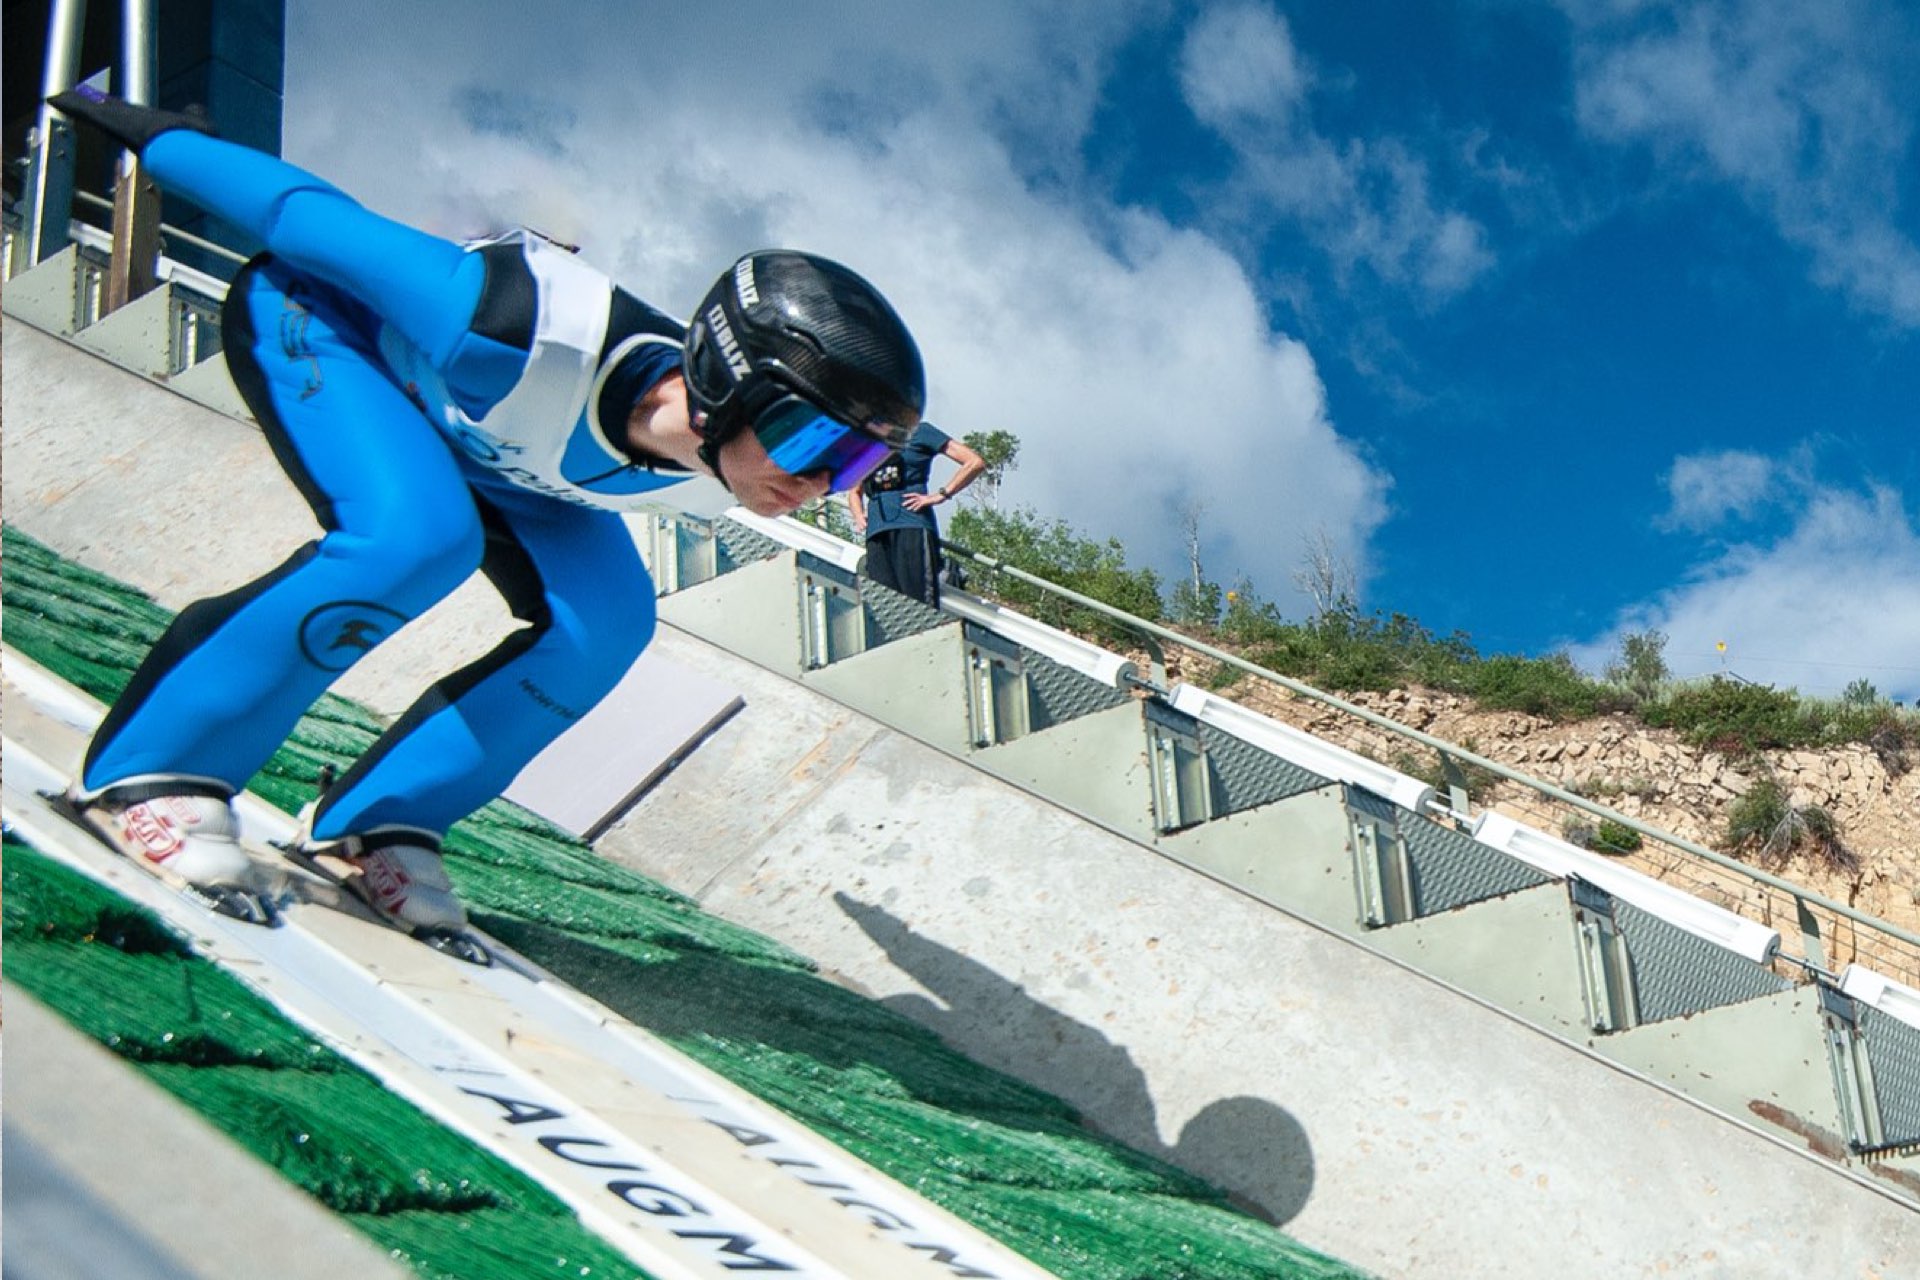 ski-jumping-terms-usa-nordic-sport